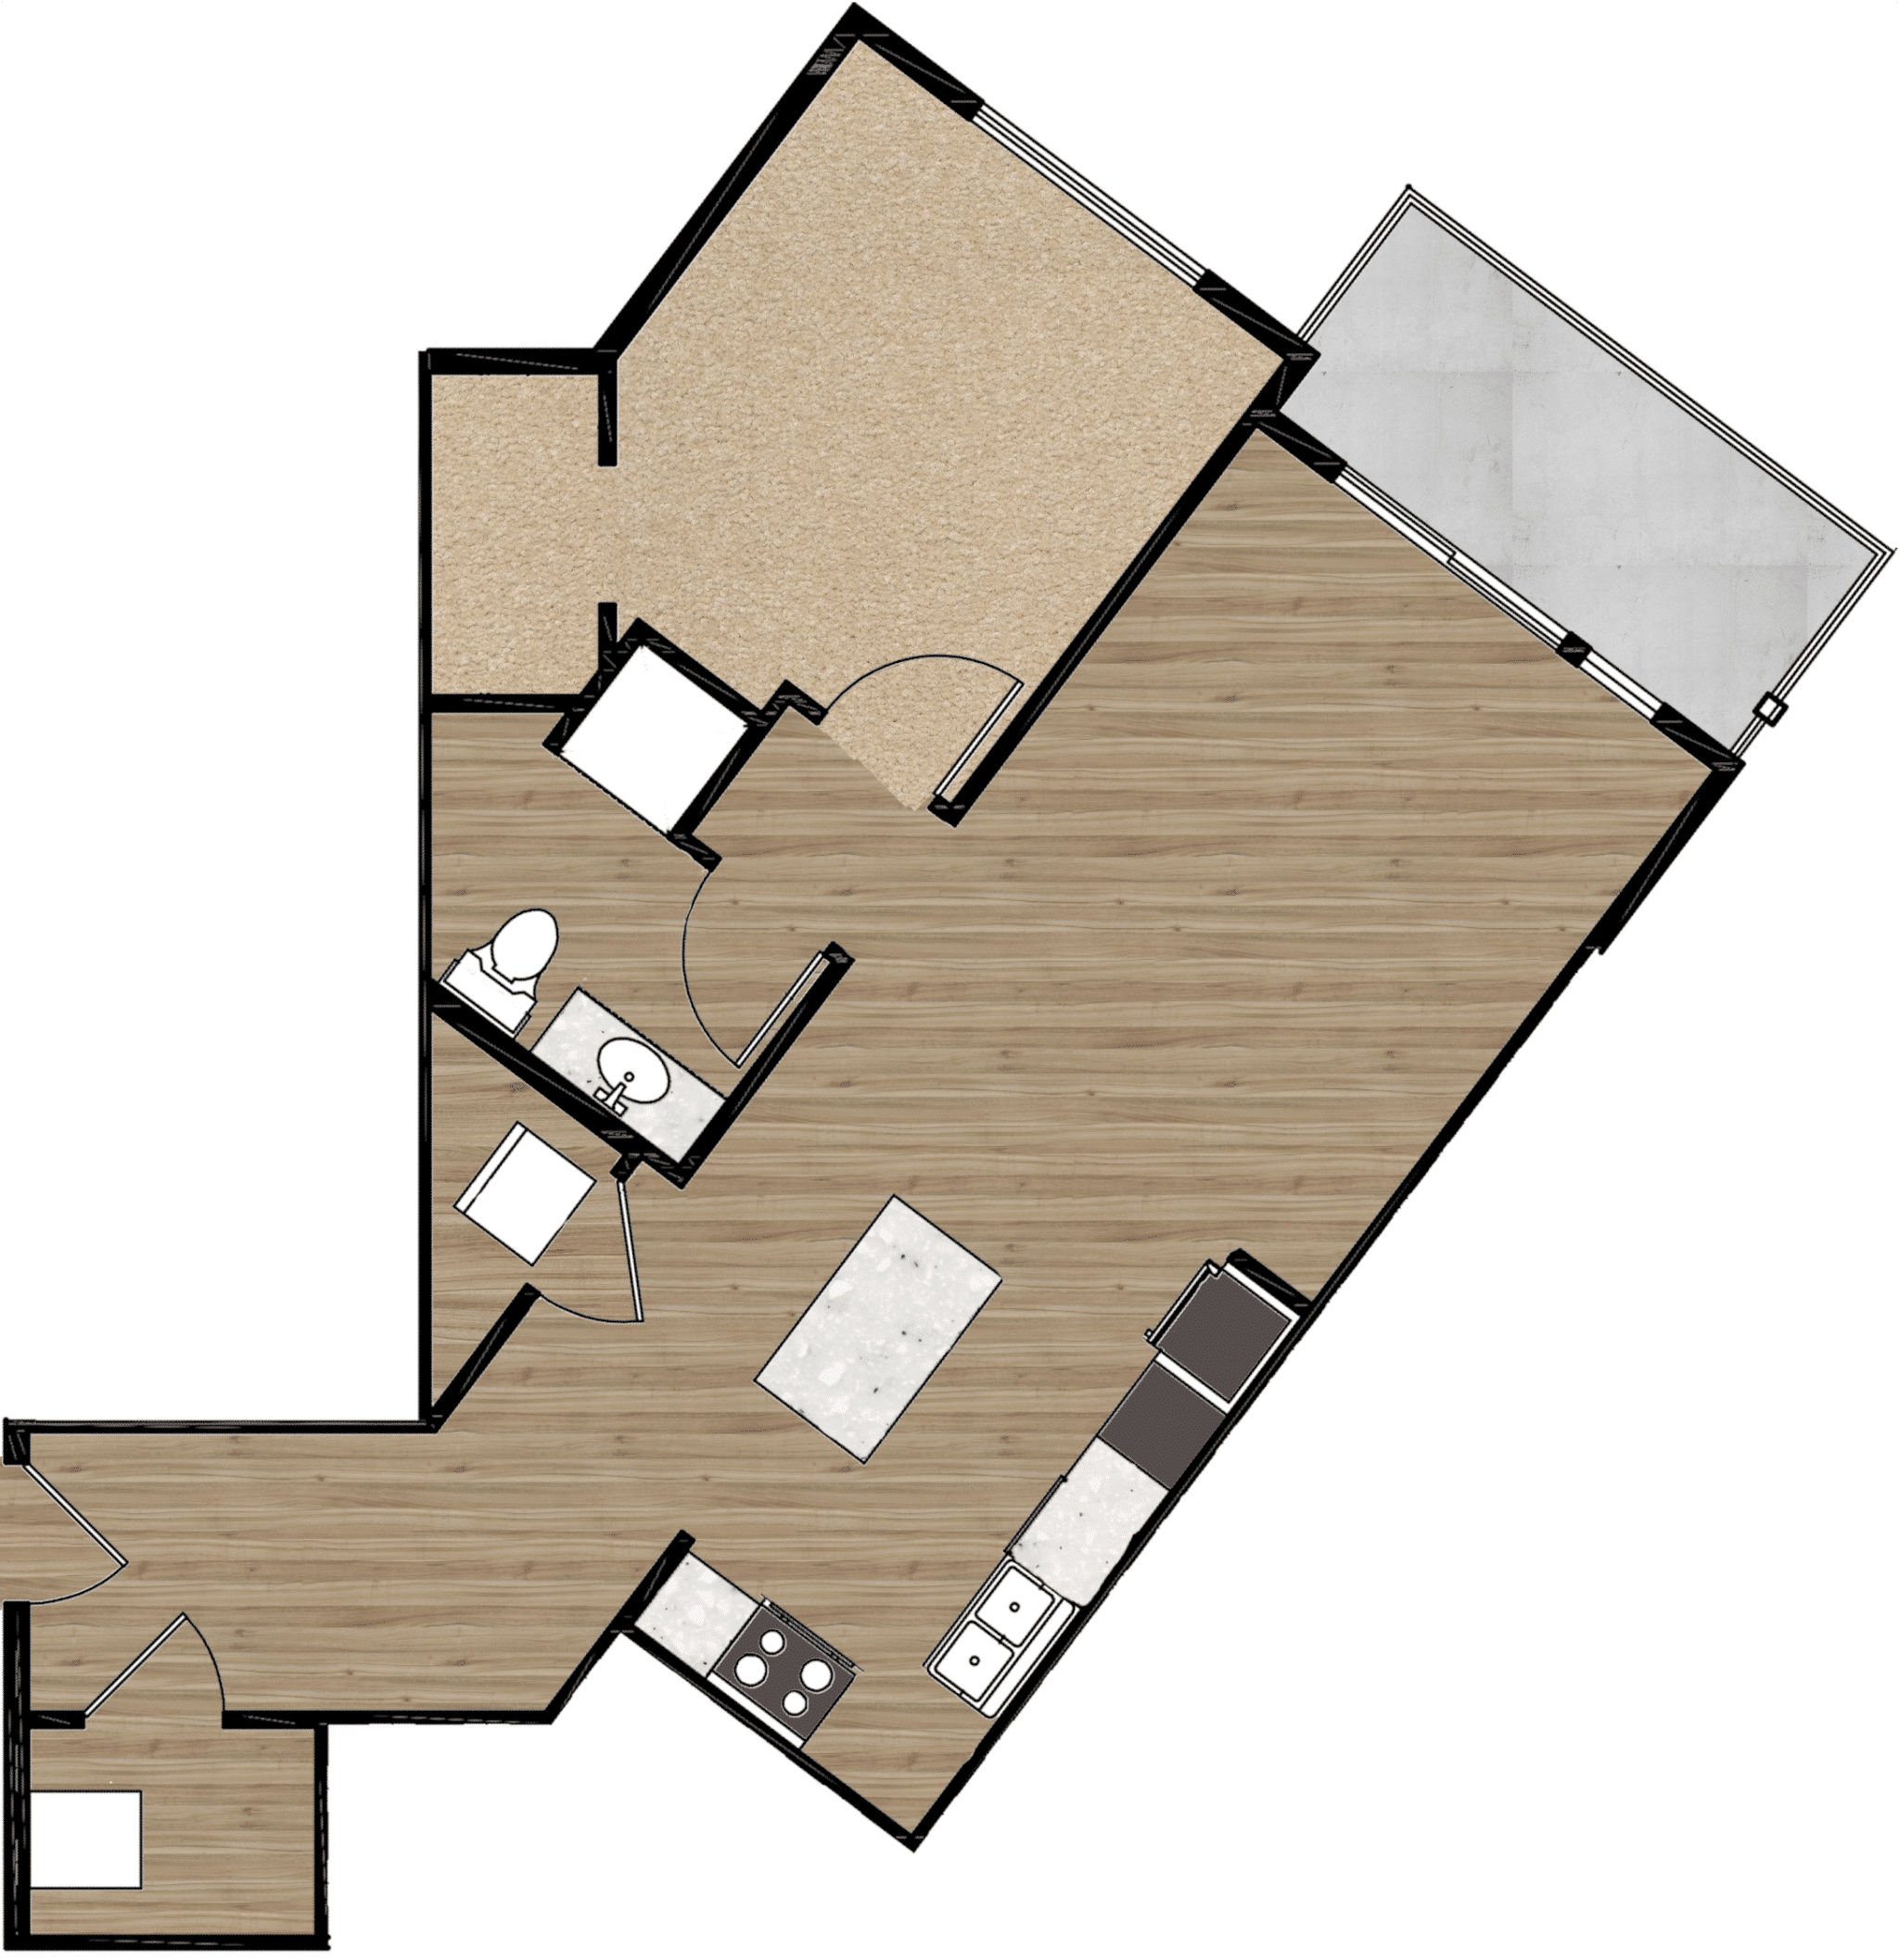 Draper apartment floor plan